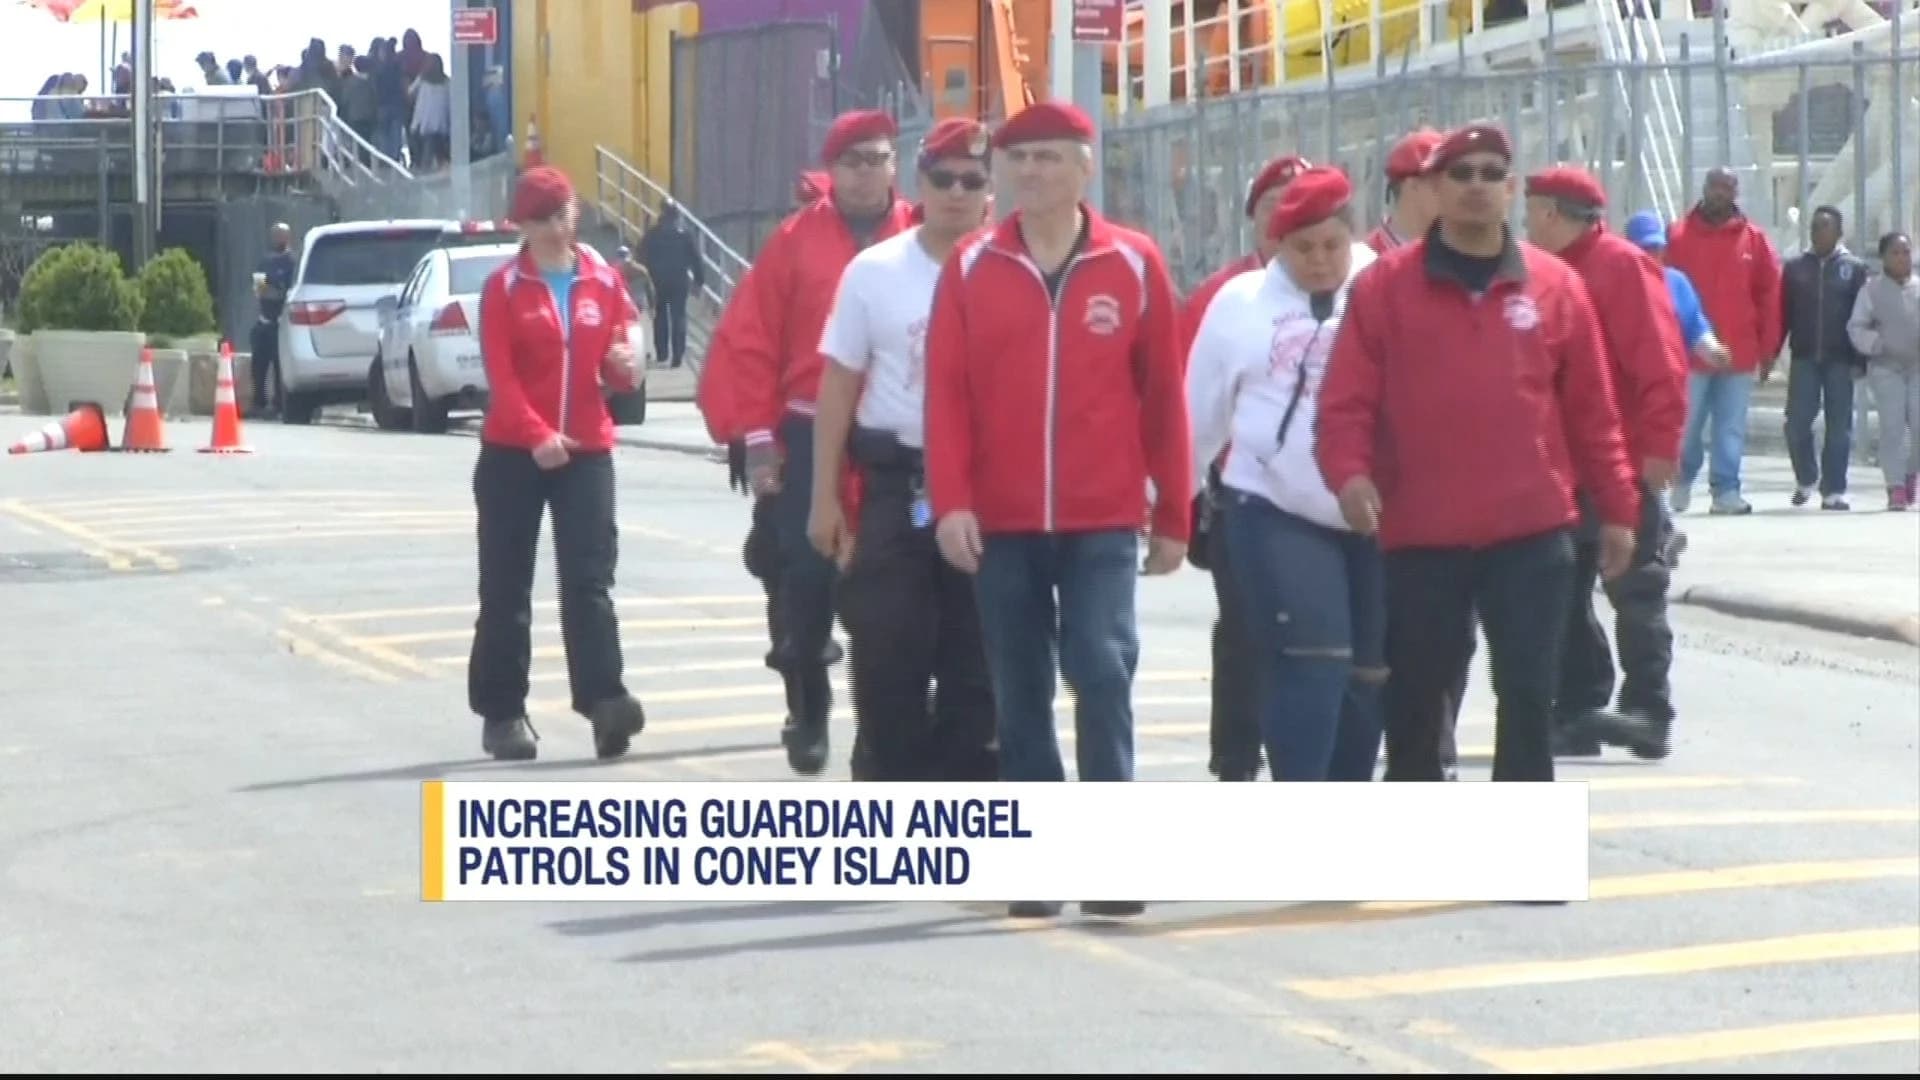 Guardian Angels increase patrols in Coney Island